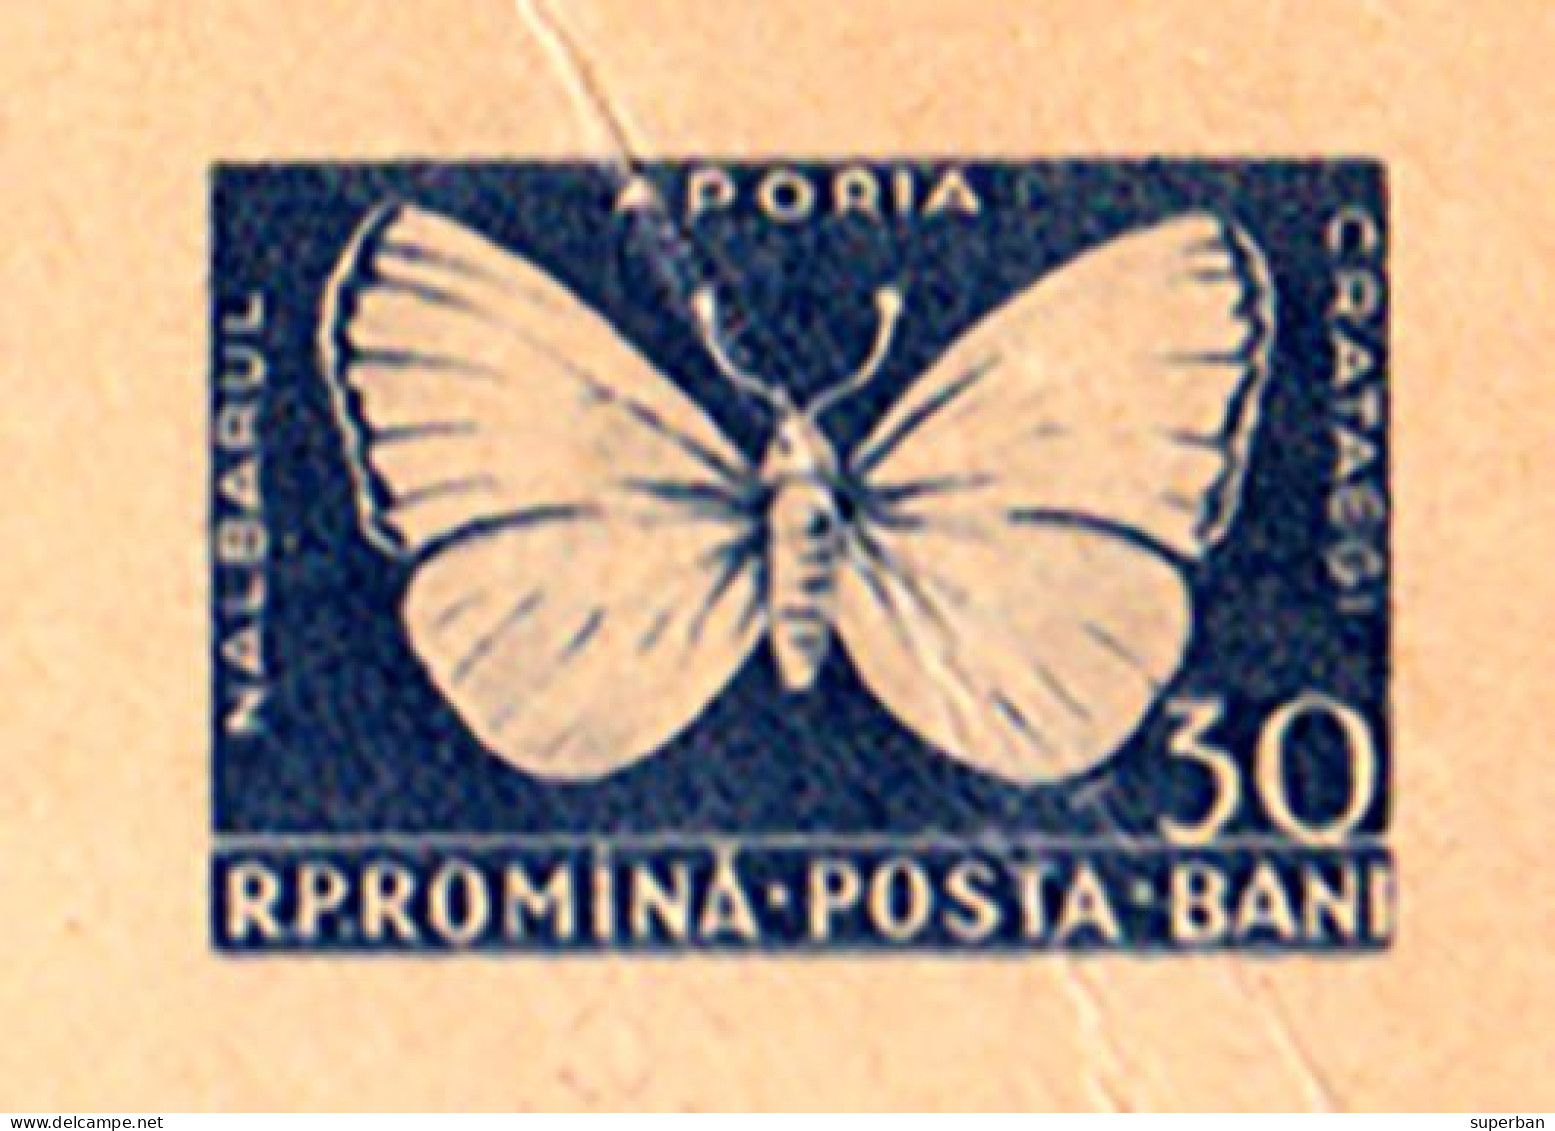 ROMANIA ~ 1960 : CARTE POSTALA / STATIONERY POSTCARD : THE FALL WEBWORM / HYPHANTRIA CUNEA / BUTTERFLY - RRR ! (an657) - Postal Stationery